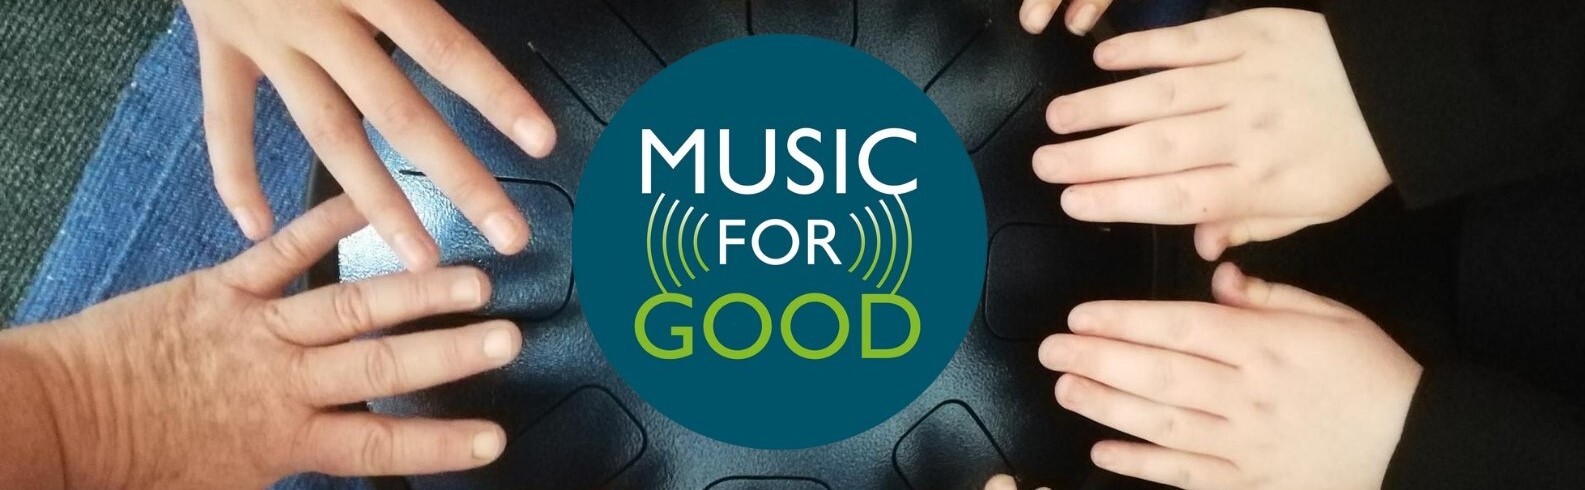 Music For Good